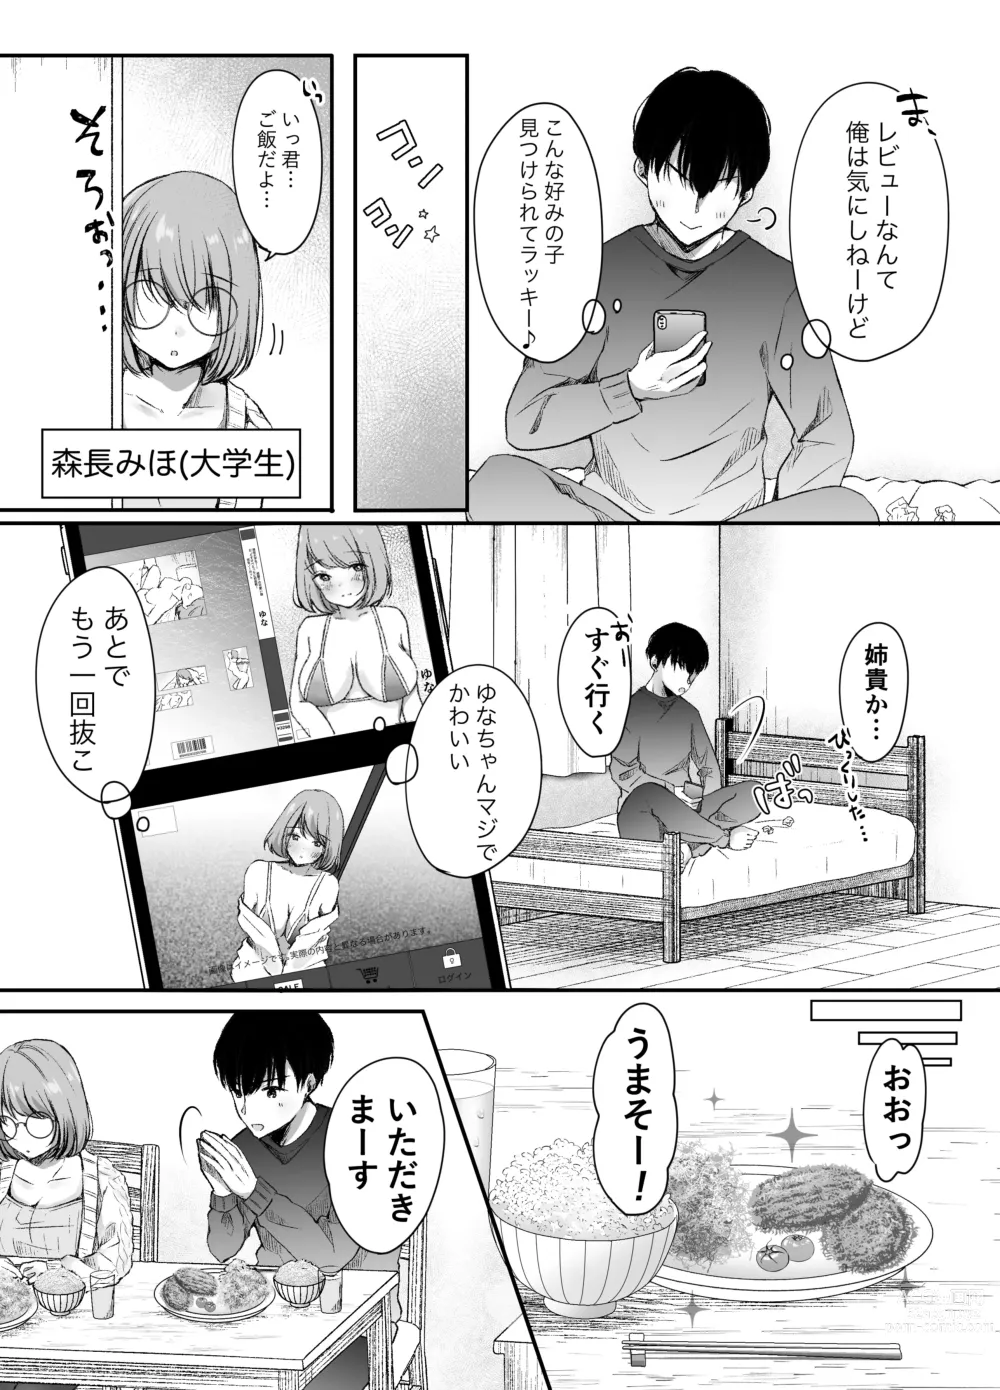 Page 6 of doujinshi Ore no Ane ga AV Joyuu!?